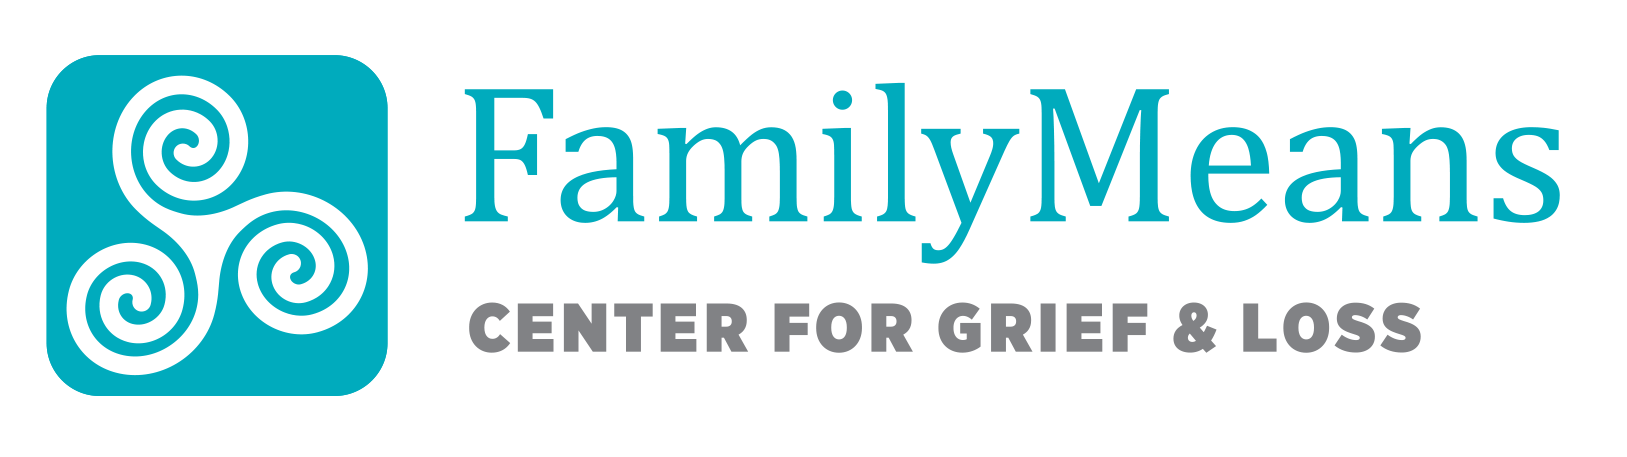 Center for Grief & Loss Logo